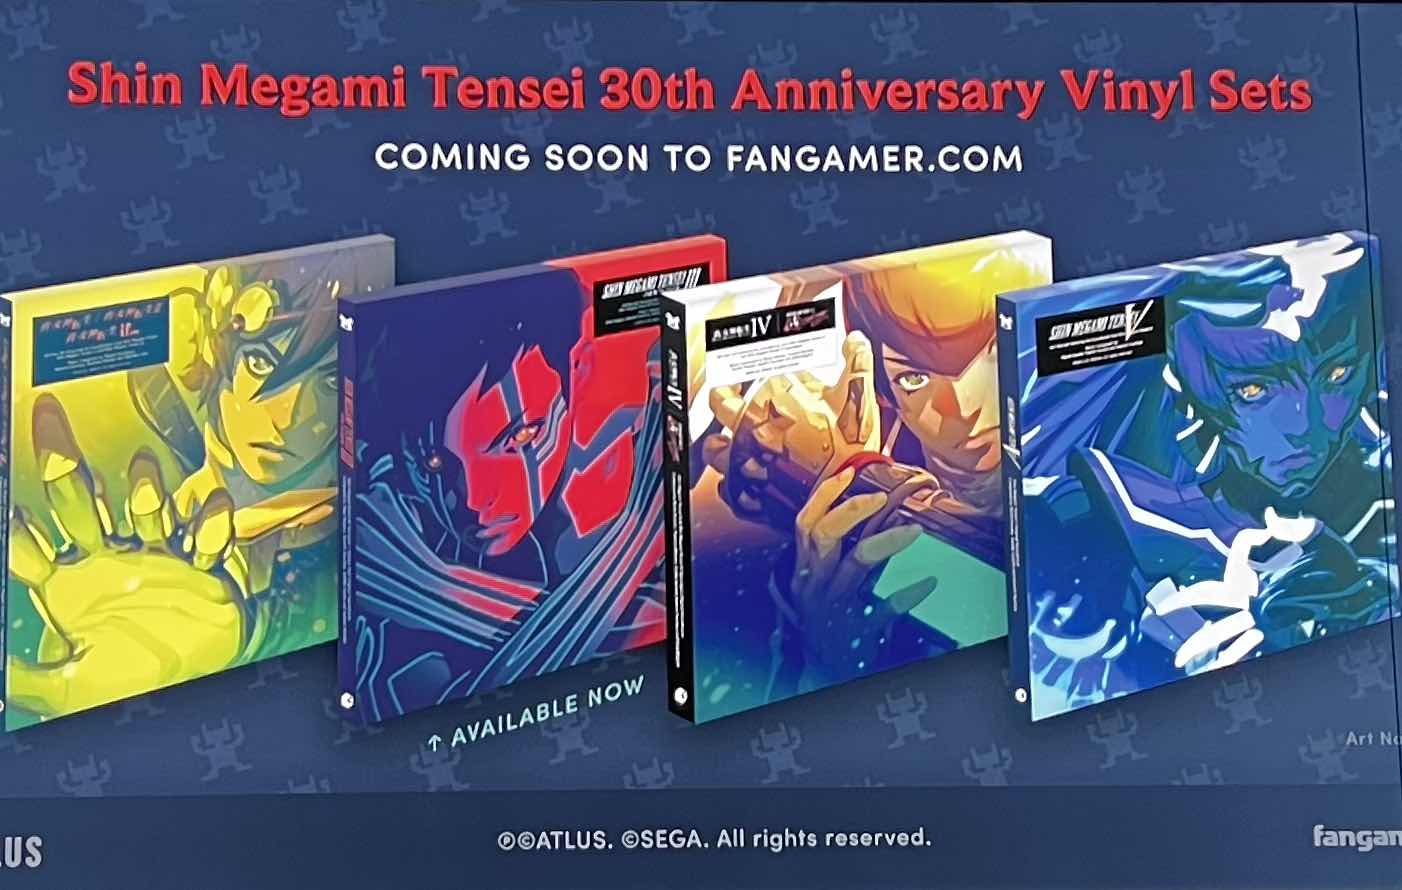 Shin Megami Tensei 30th Anniversary Vinyl Announced Featuring I, II, Nocturne, IV, V & if…